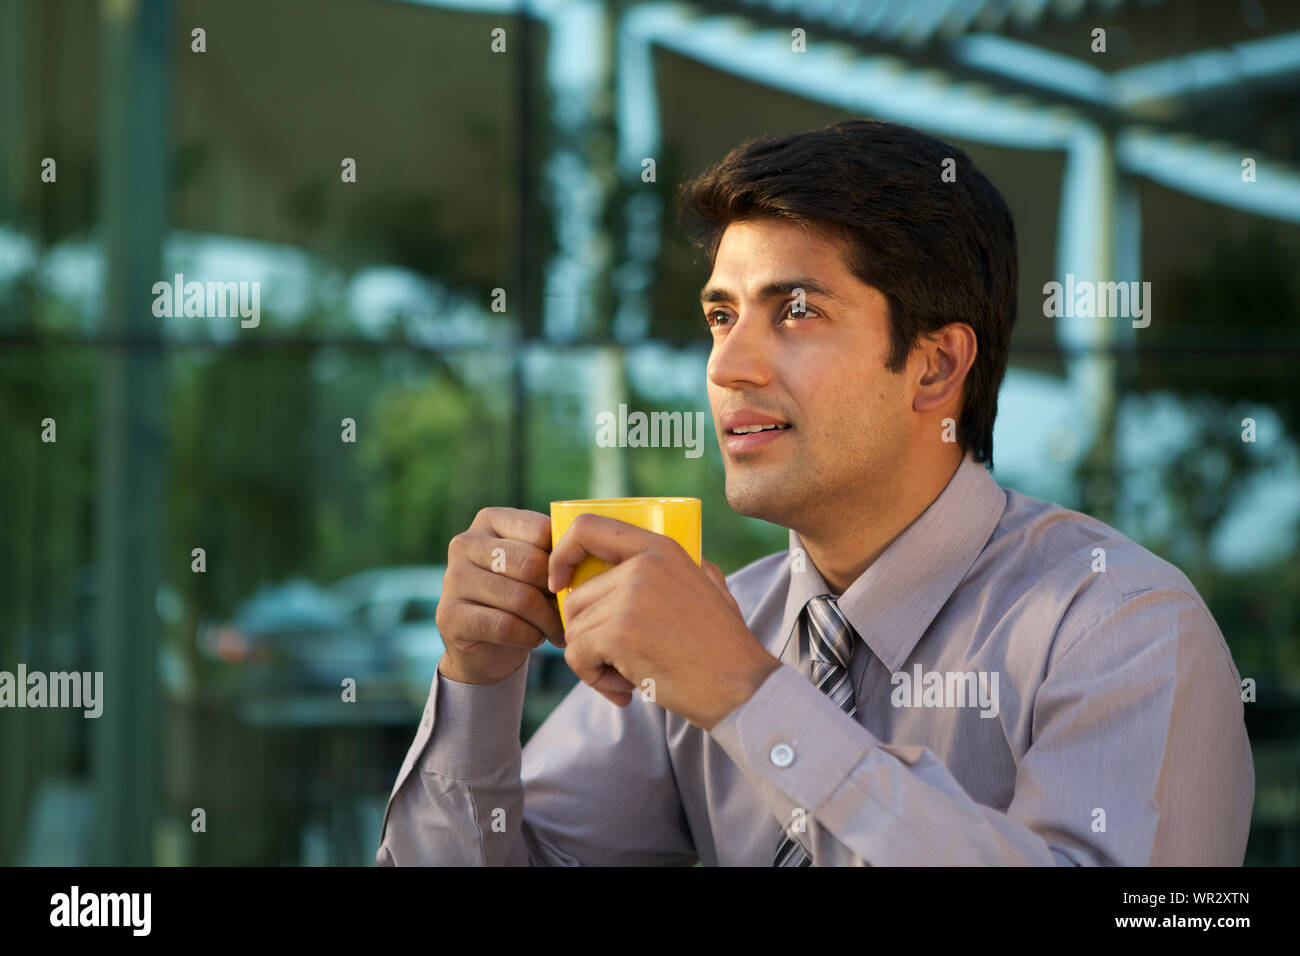 Imprenditore avente una tazza di caffè e sorridente Foto Stock